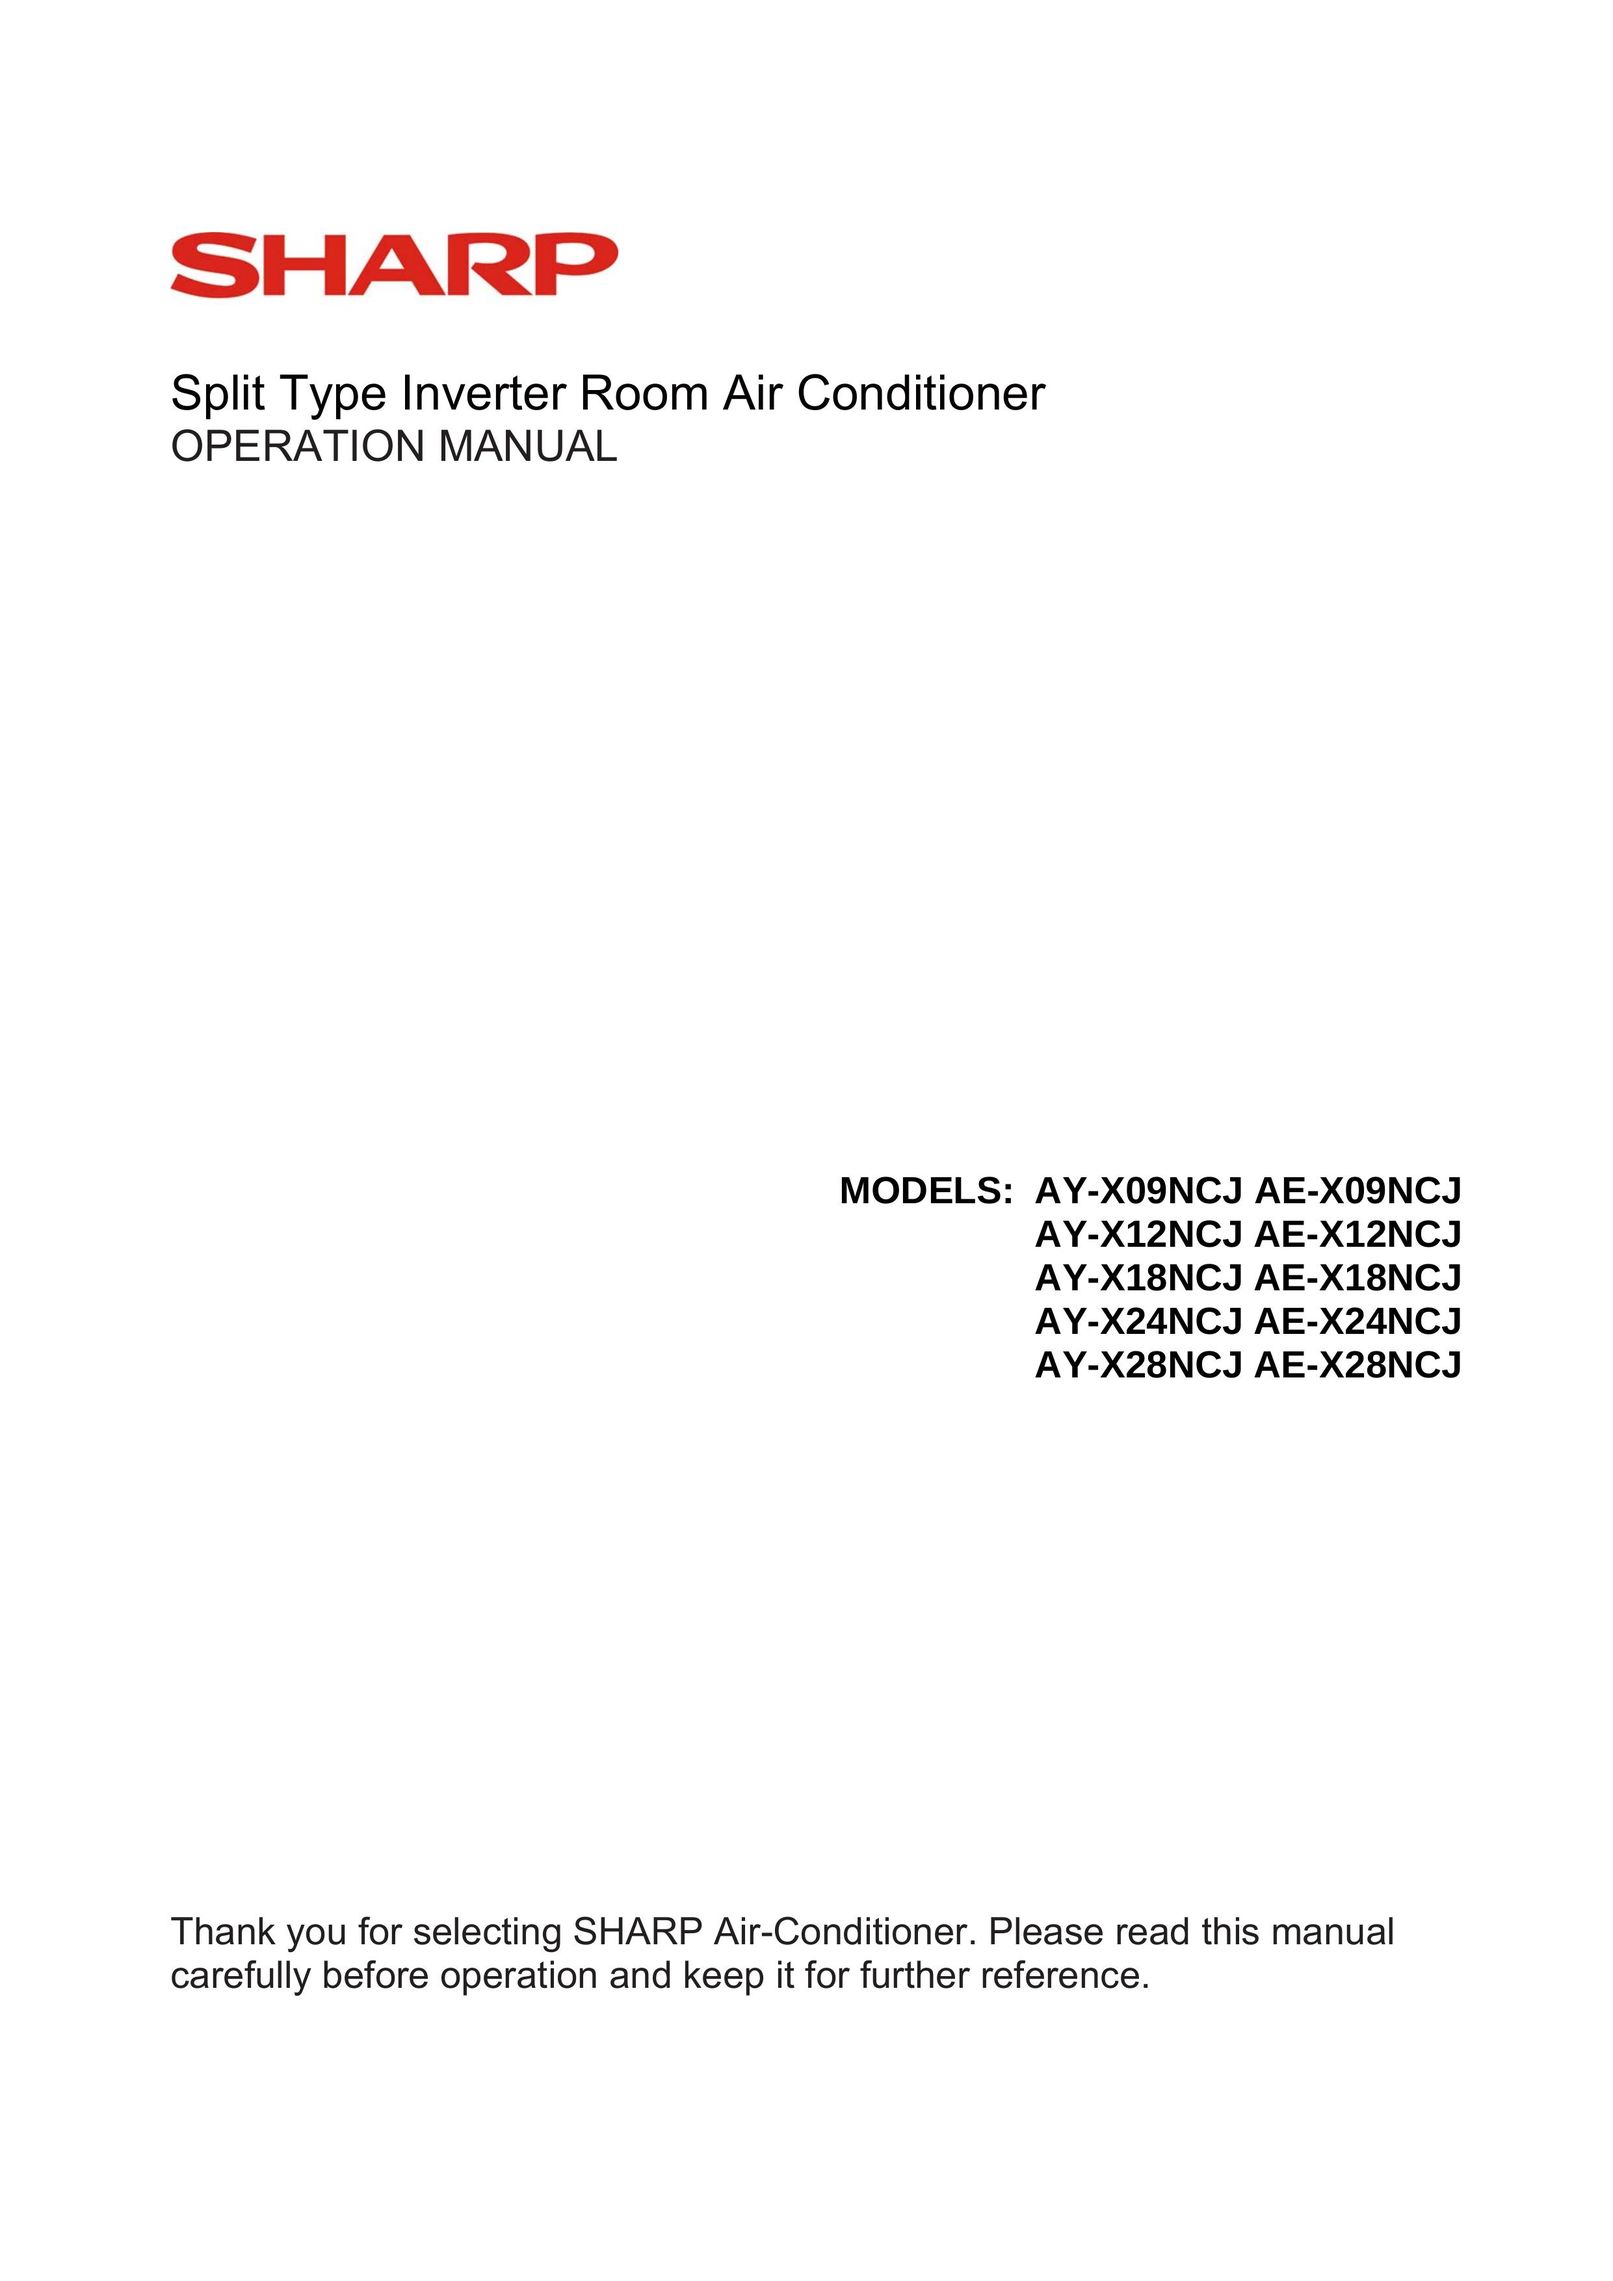 Sharp AE-X18NCJ Air Conditioner User Manual